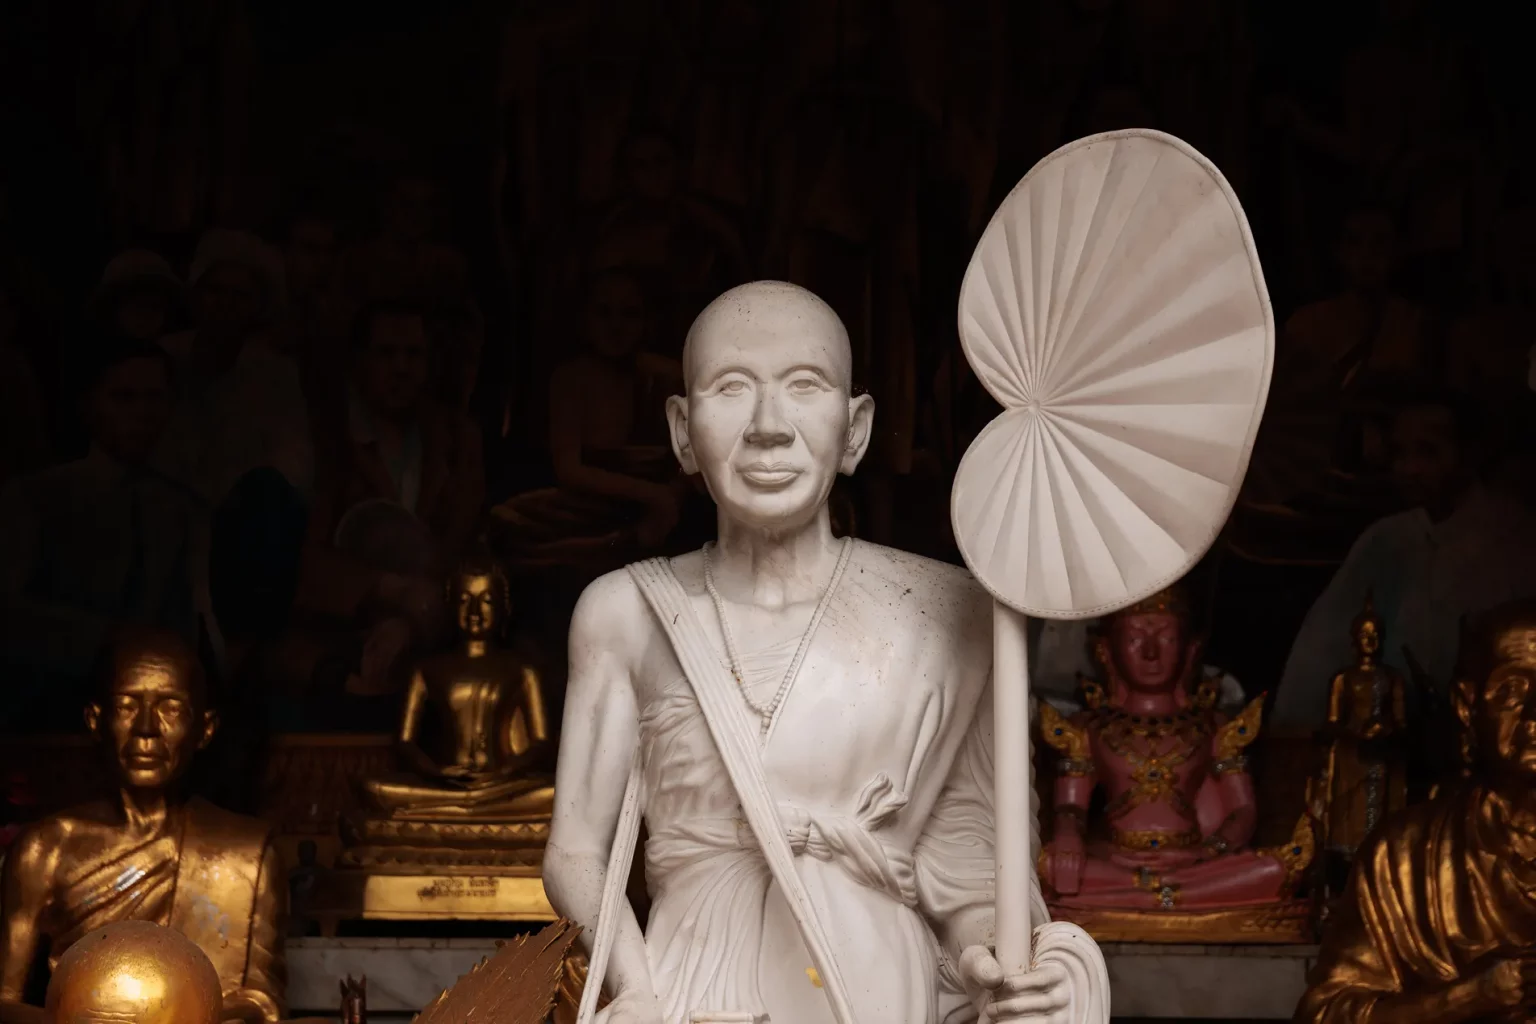 Great monk Khruba Siwichai statue in Doi Suthep, Chiang Mai - Thailand